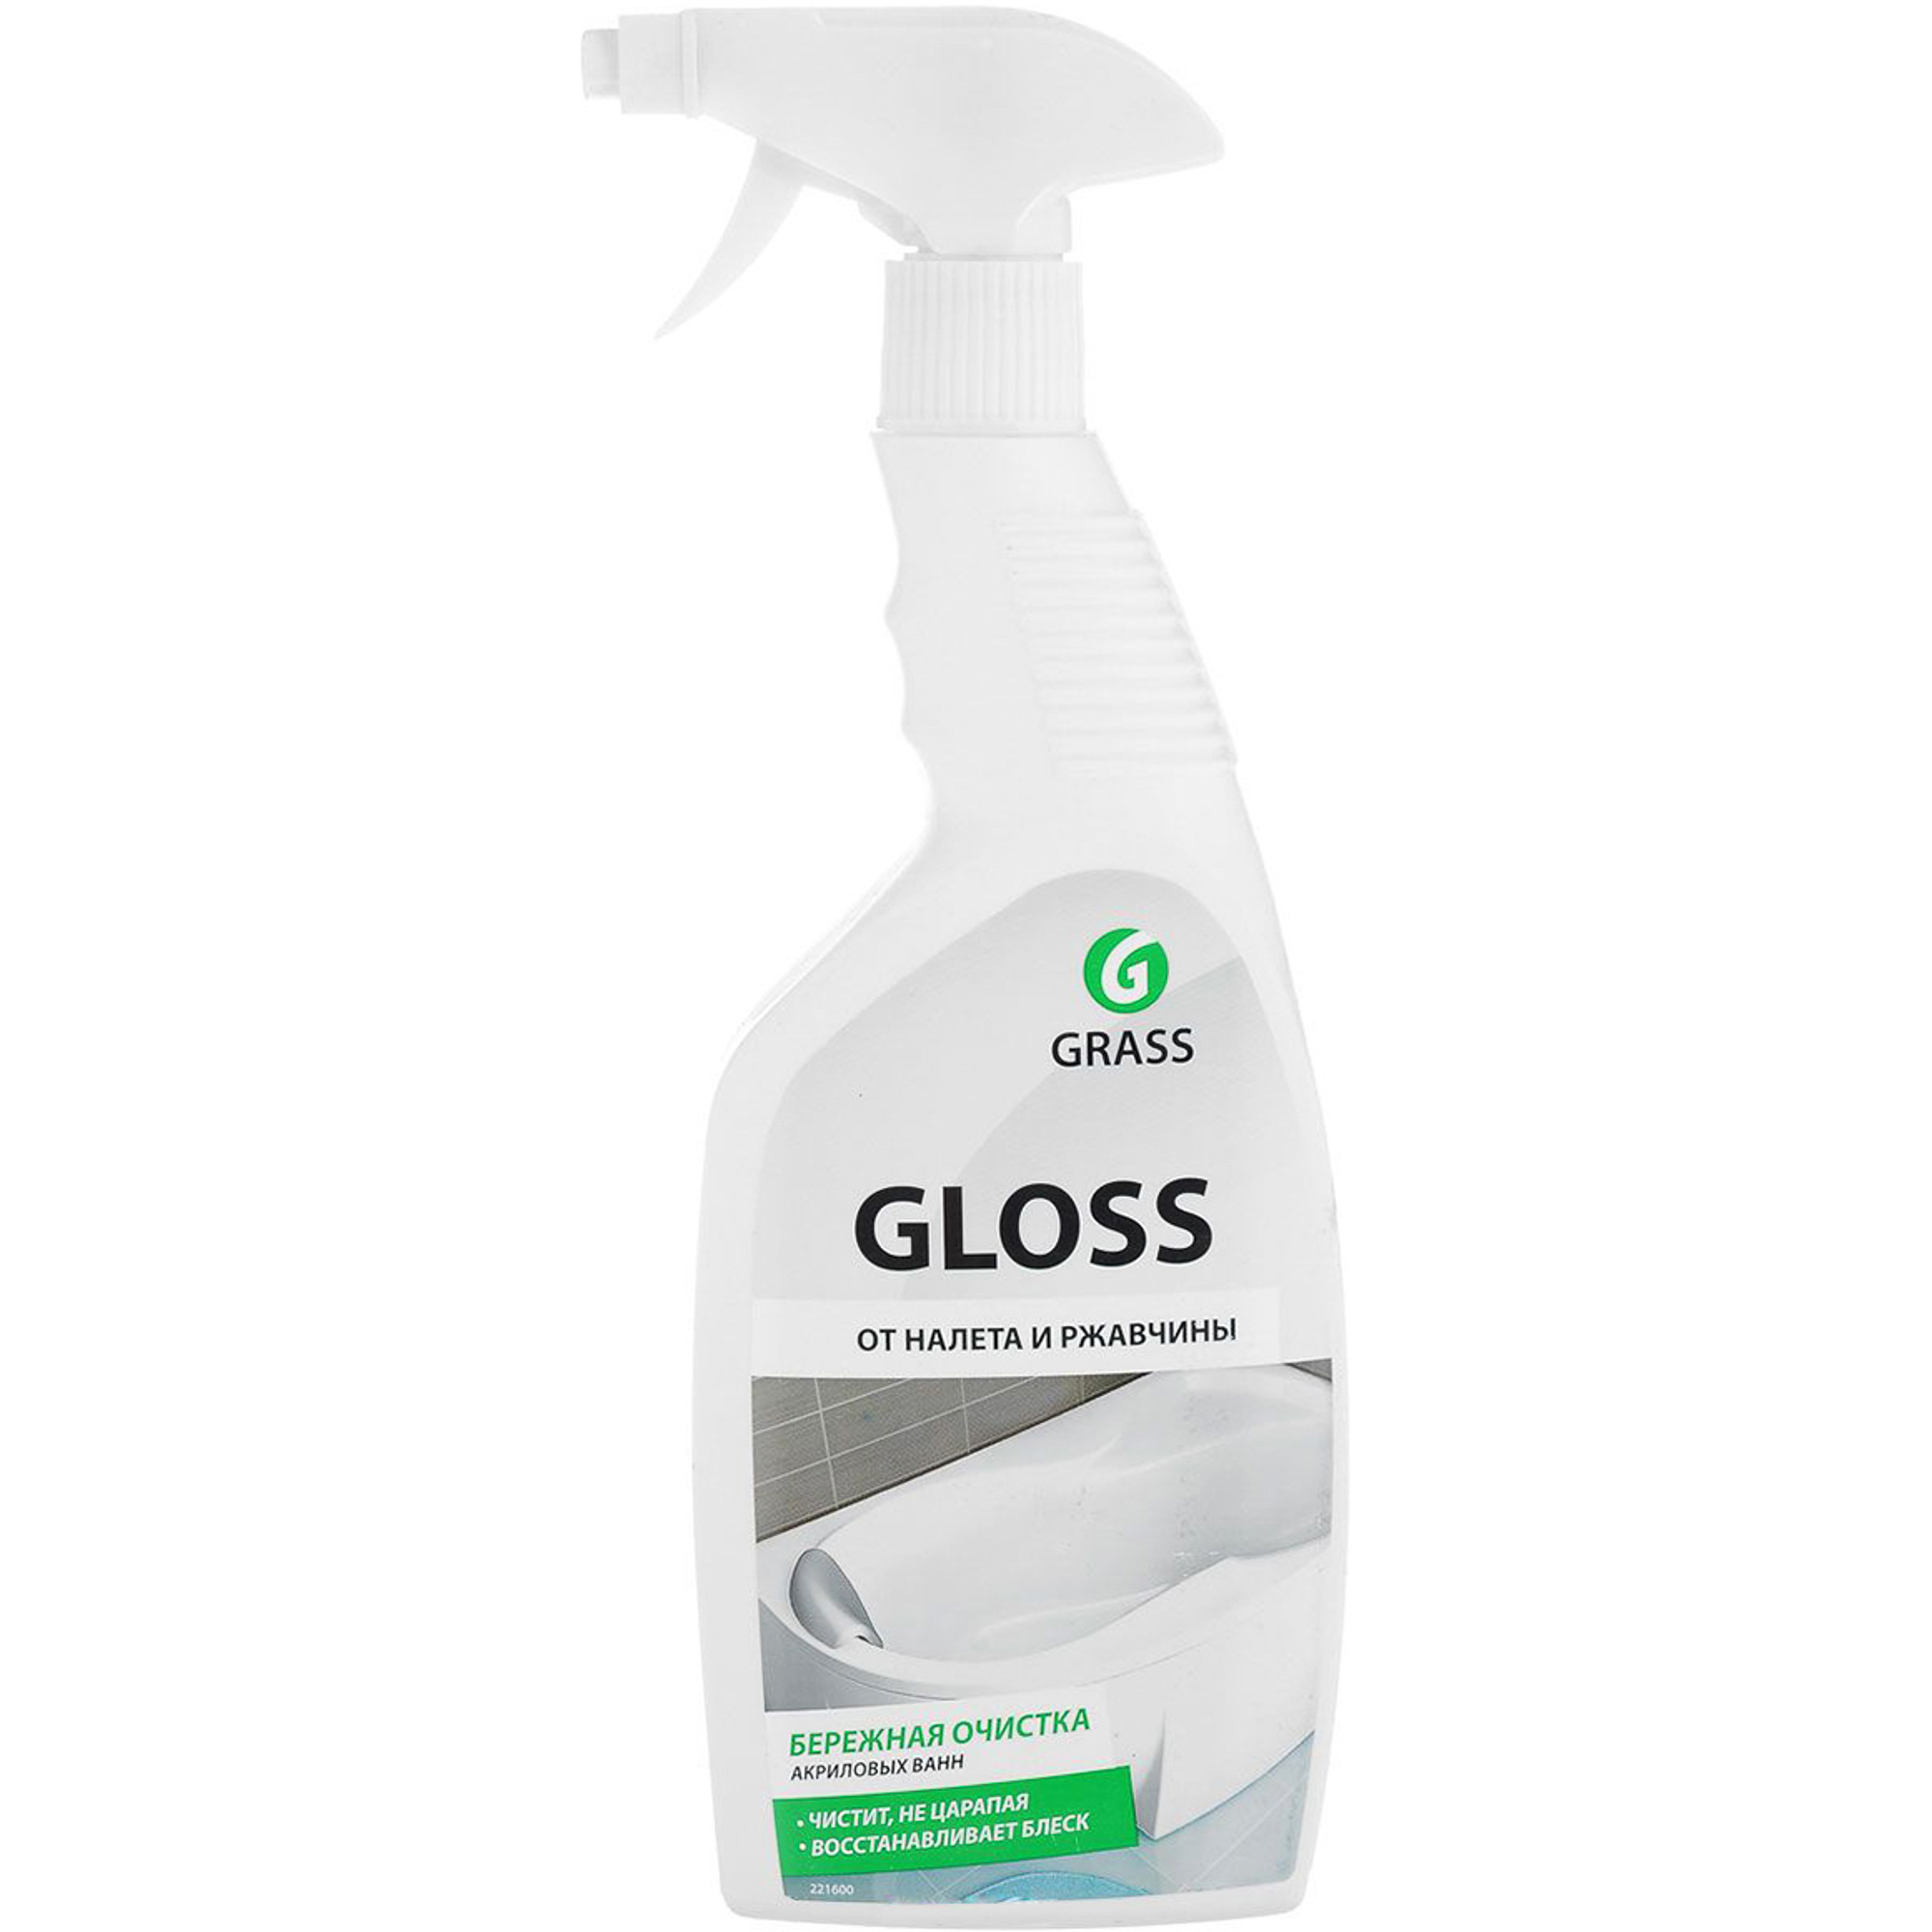 Чистящее средство для ванной комнаты Grass Gloss 600 мл - фото 1